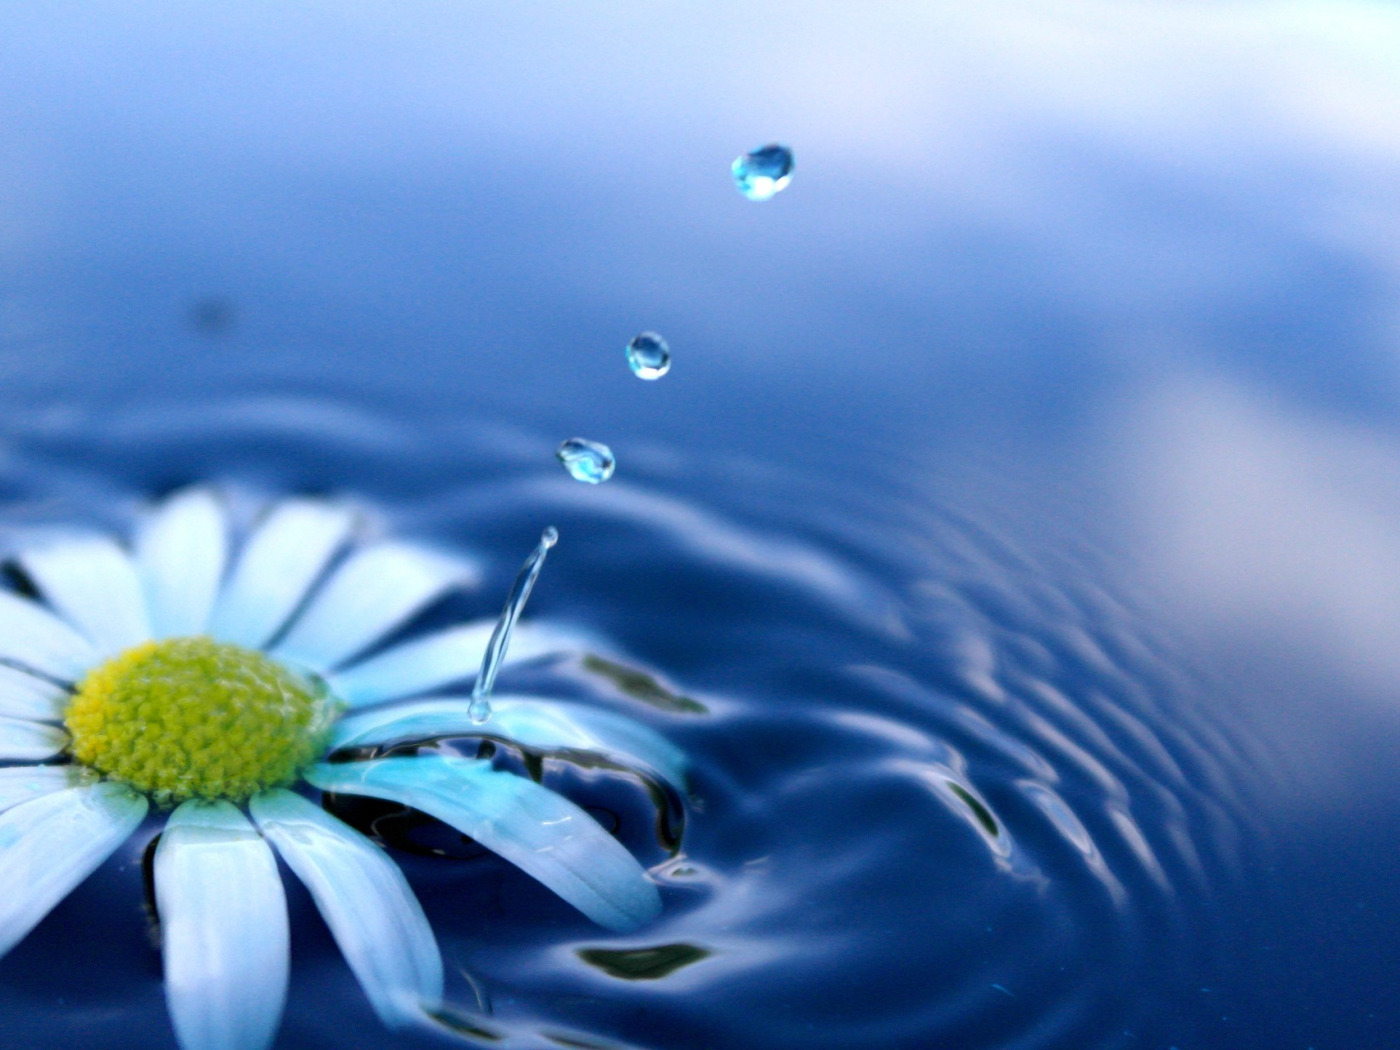 Drop flowers. Ромашки на фоне воды. Цветы на фоне воды. Капли воды. Ромашки в воде.